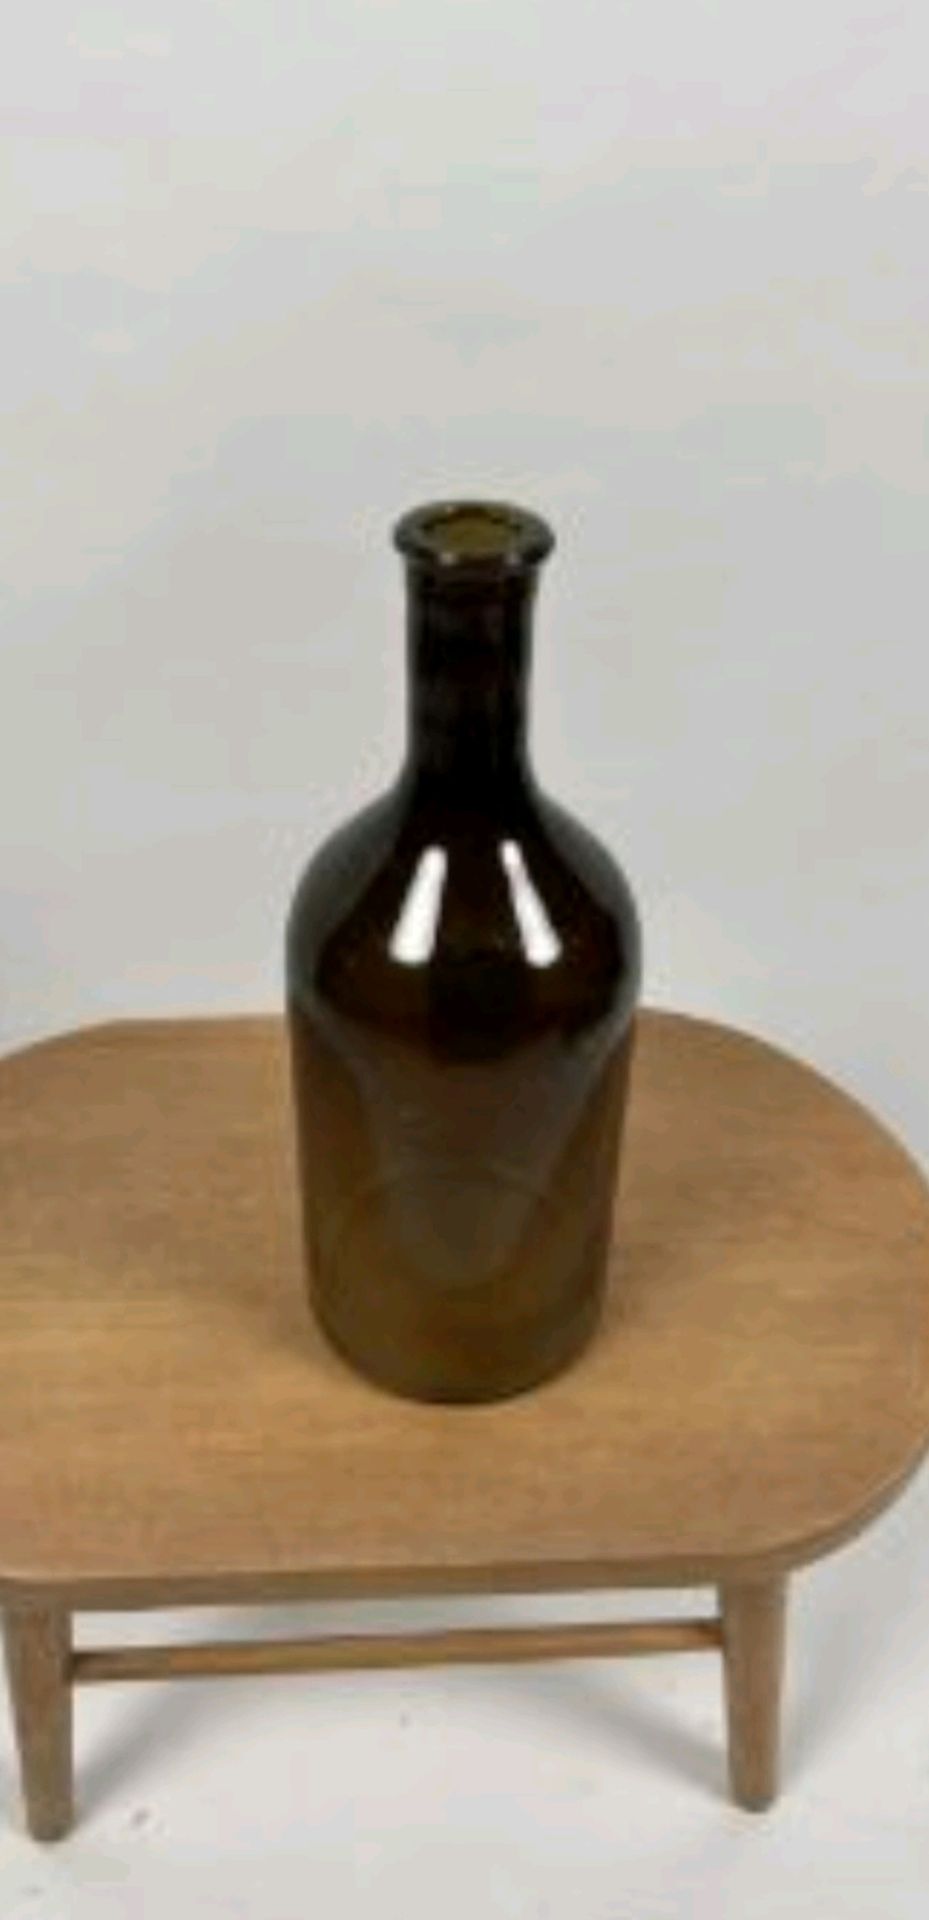 Iconic Pols Potten Bubble Bottle - Image 2 of 4